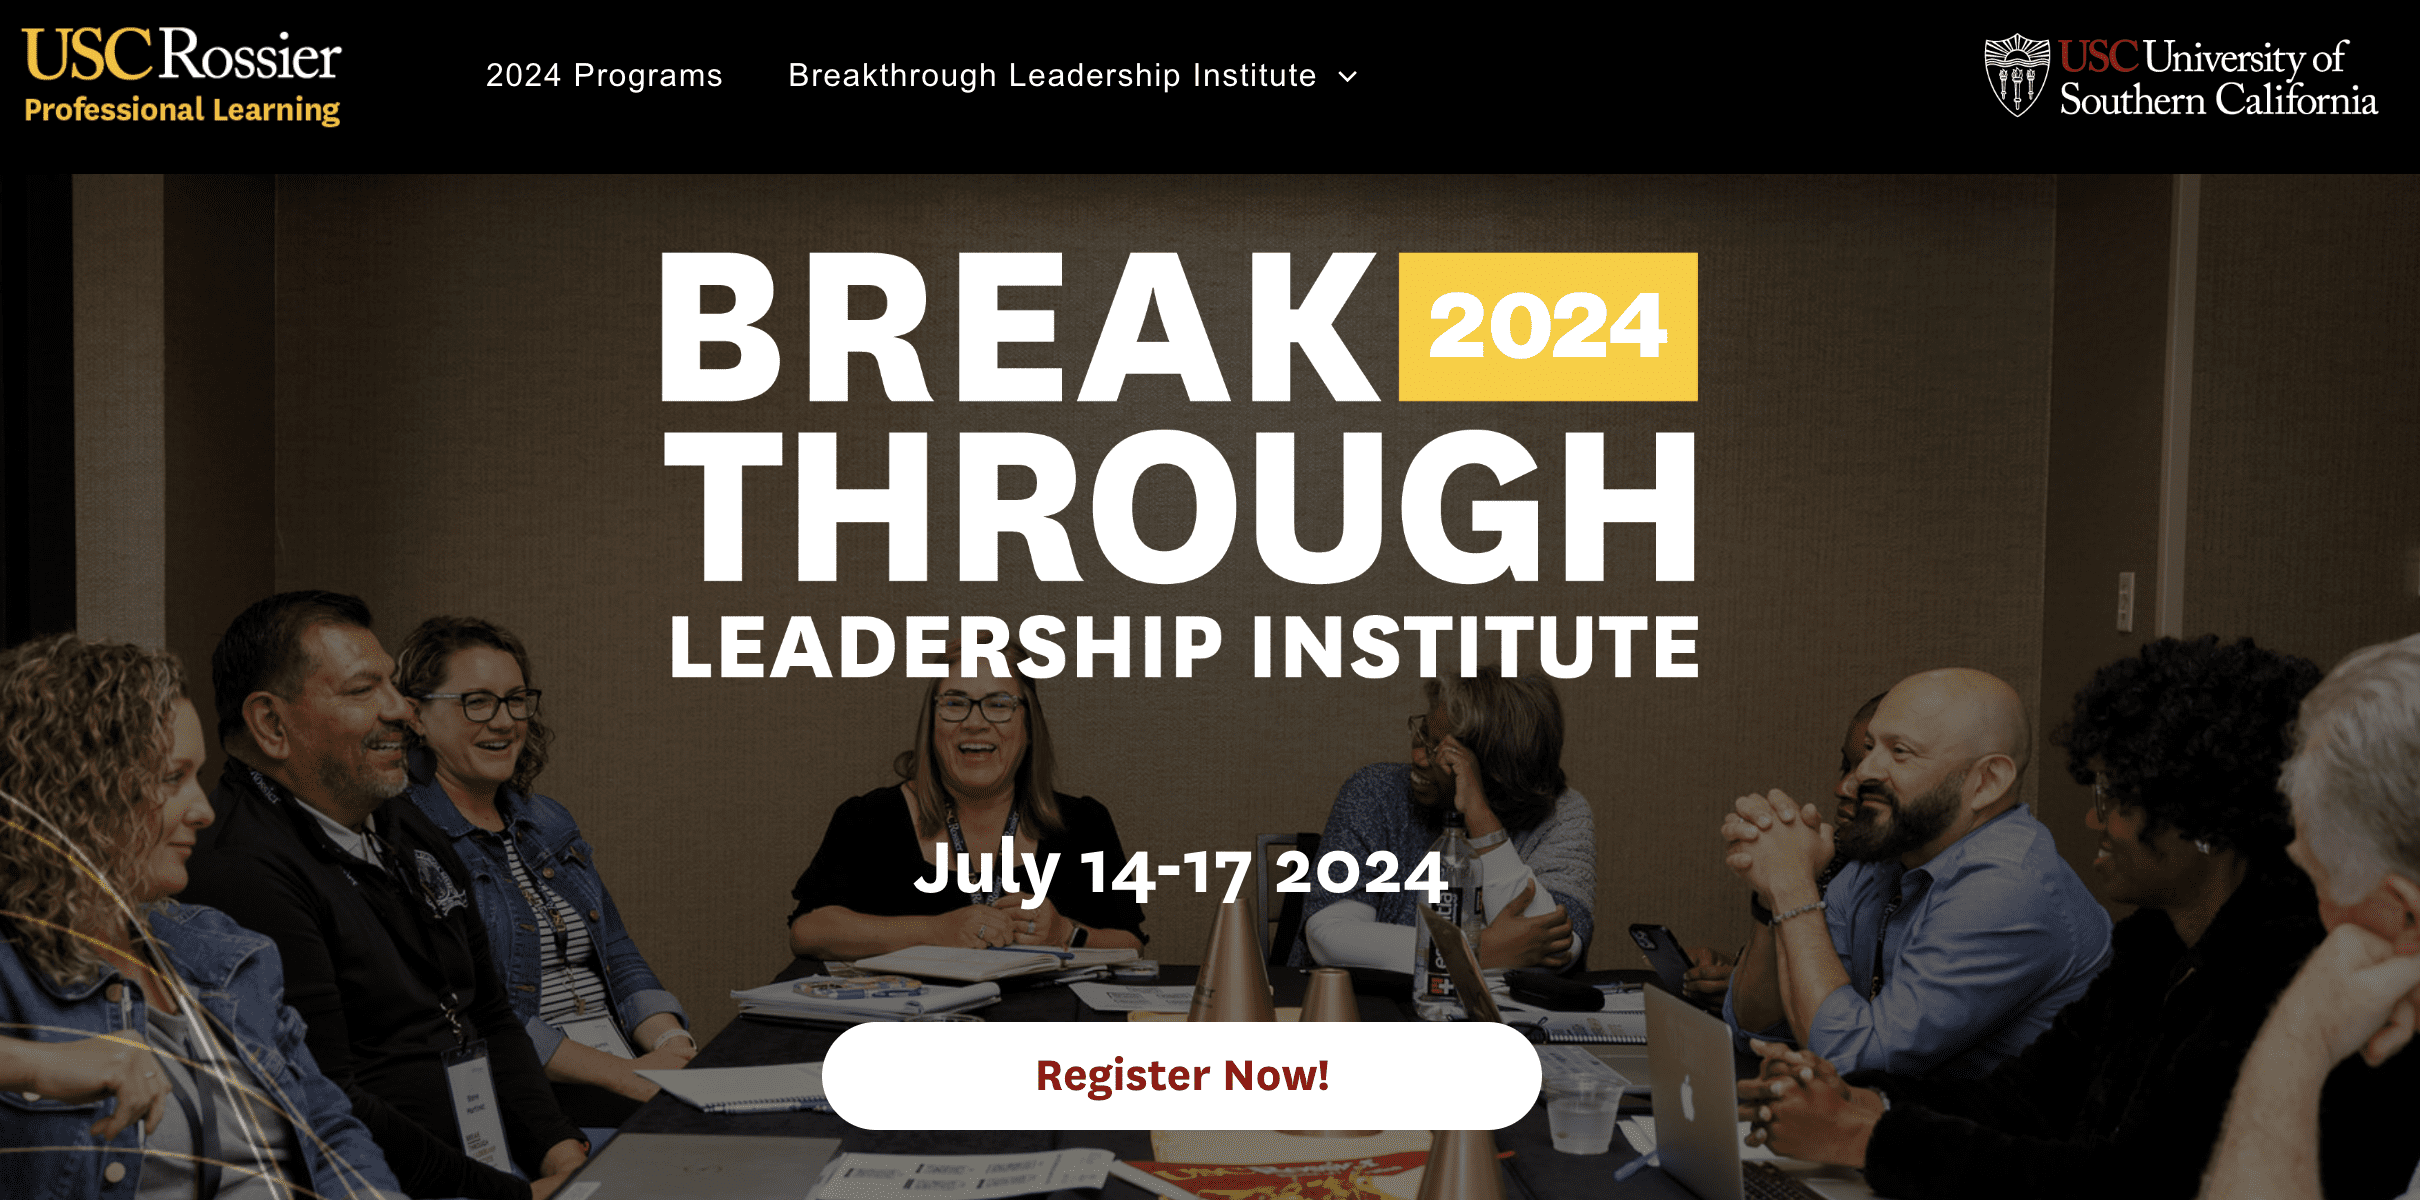 USC Rossier Breakthrough Leadership Institute